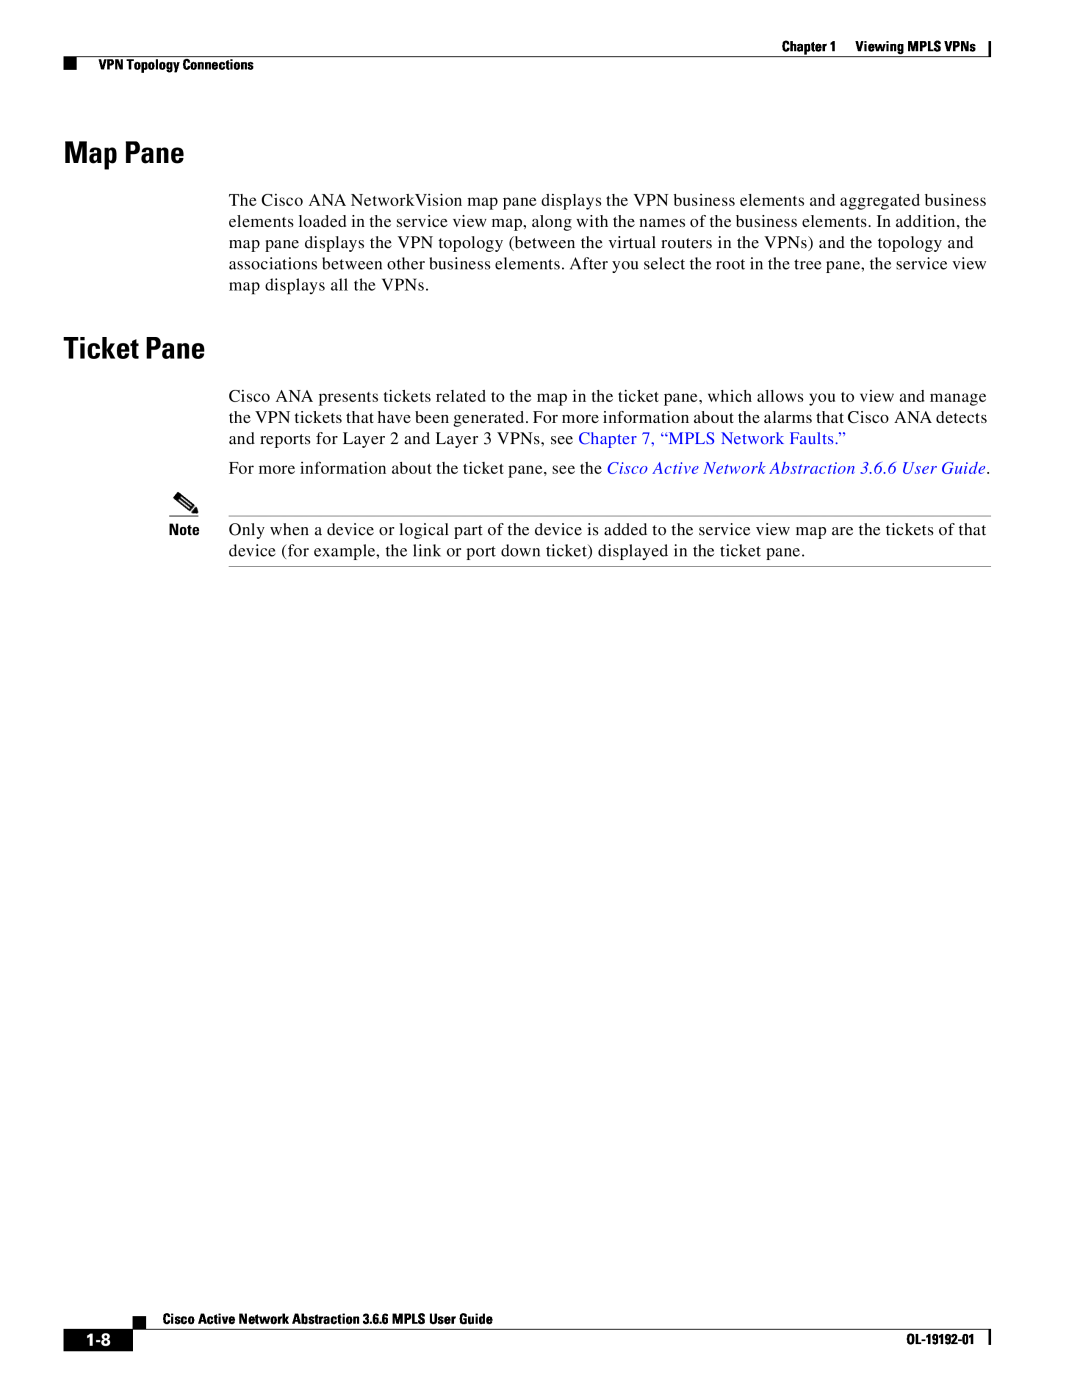 Cisco Systems 3.6.6 manual Map Pane, Ticket Pane 